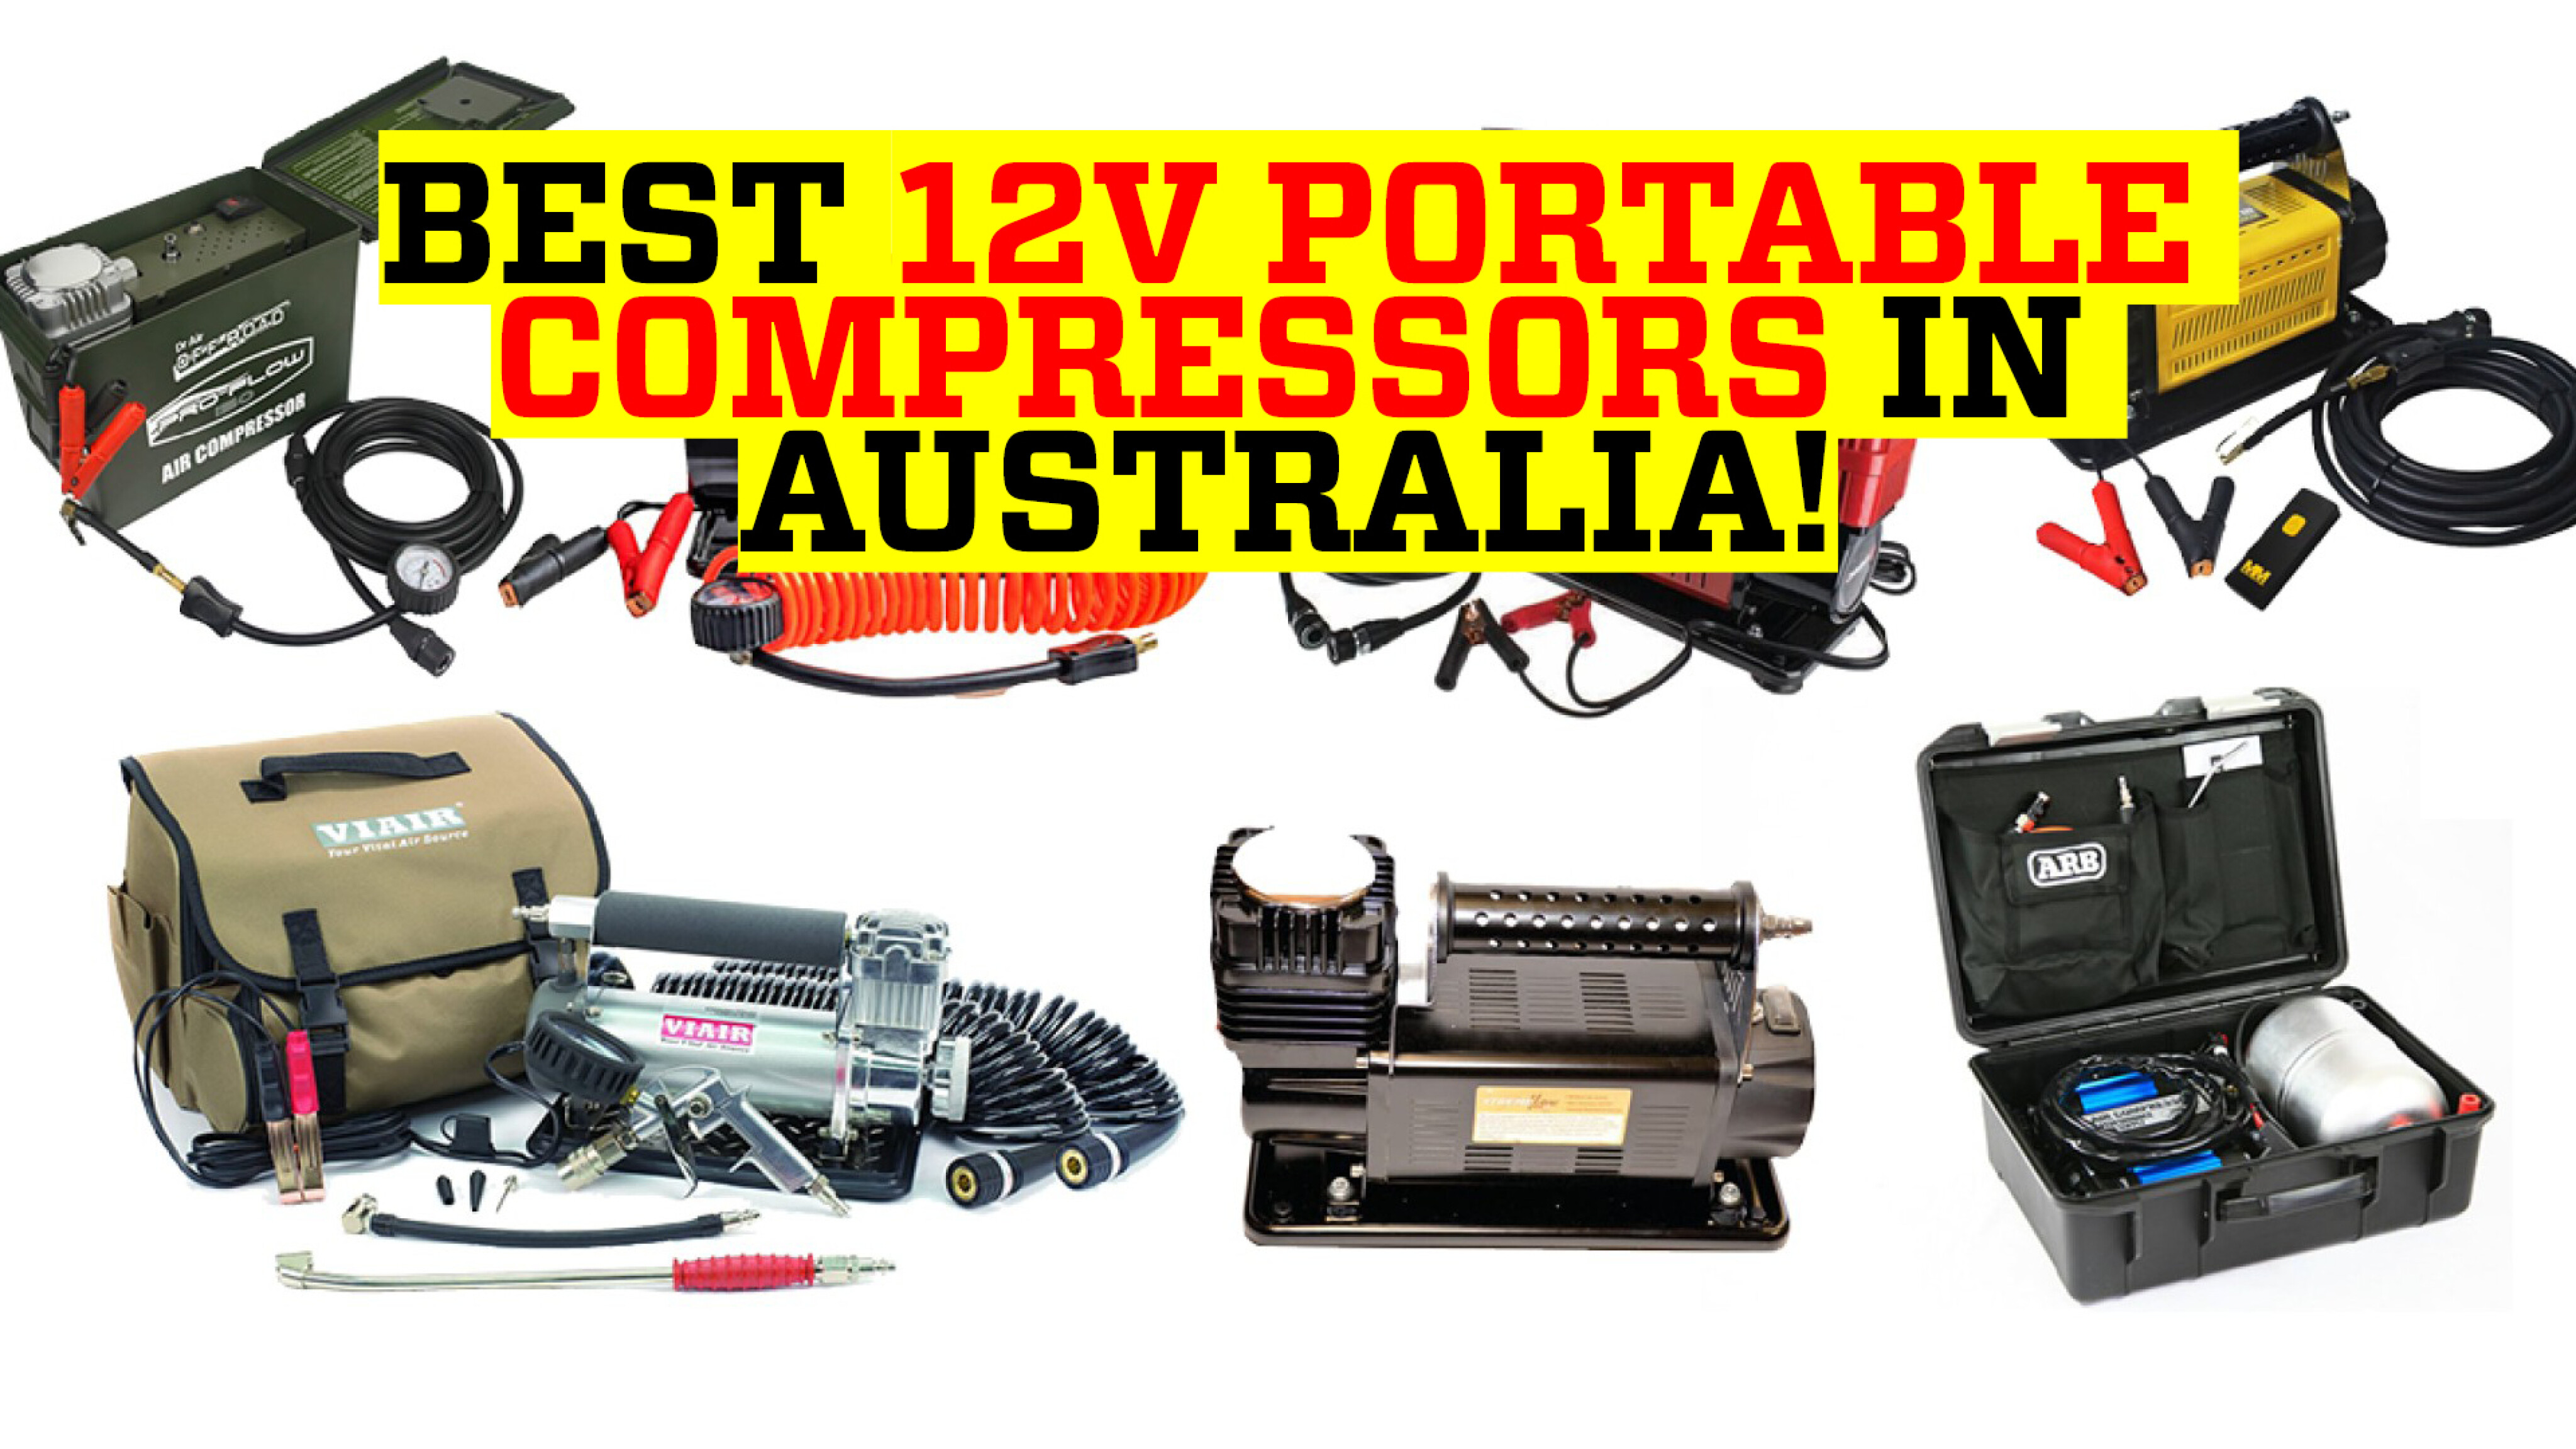 The best 12V portable compressors in Australia